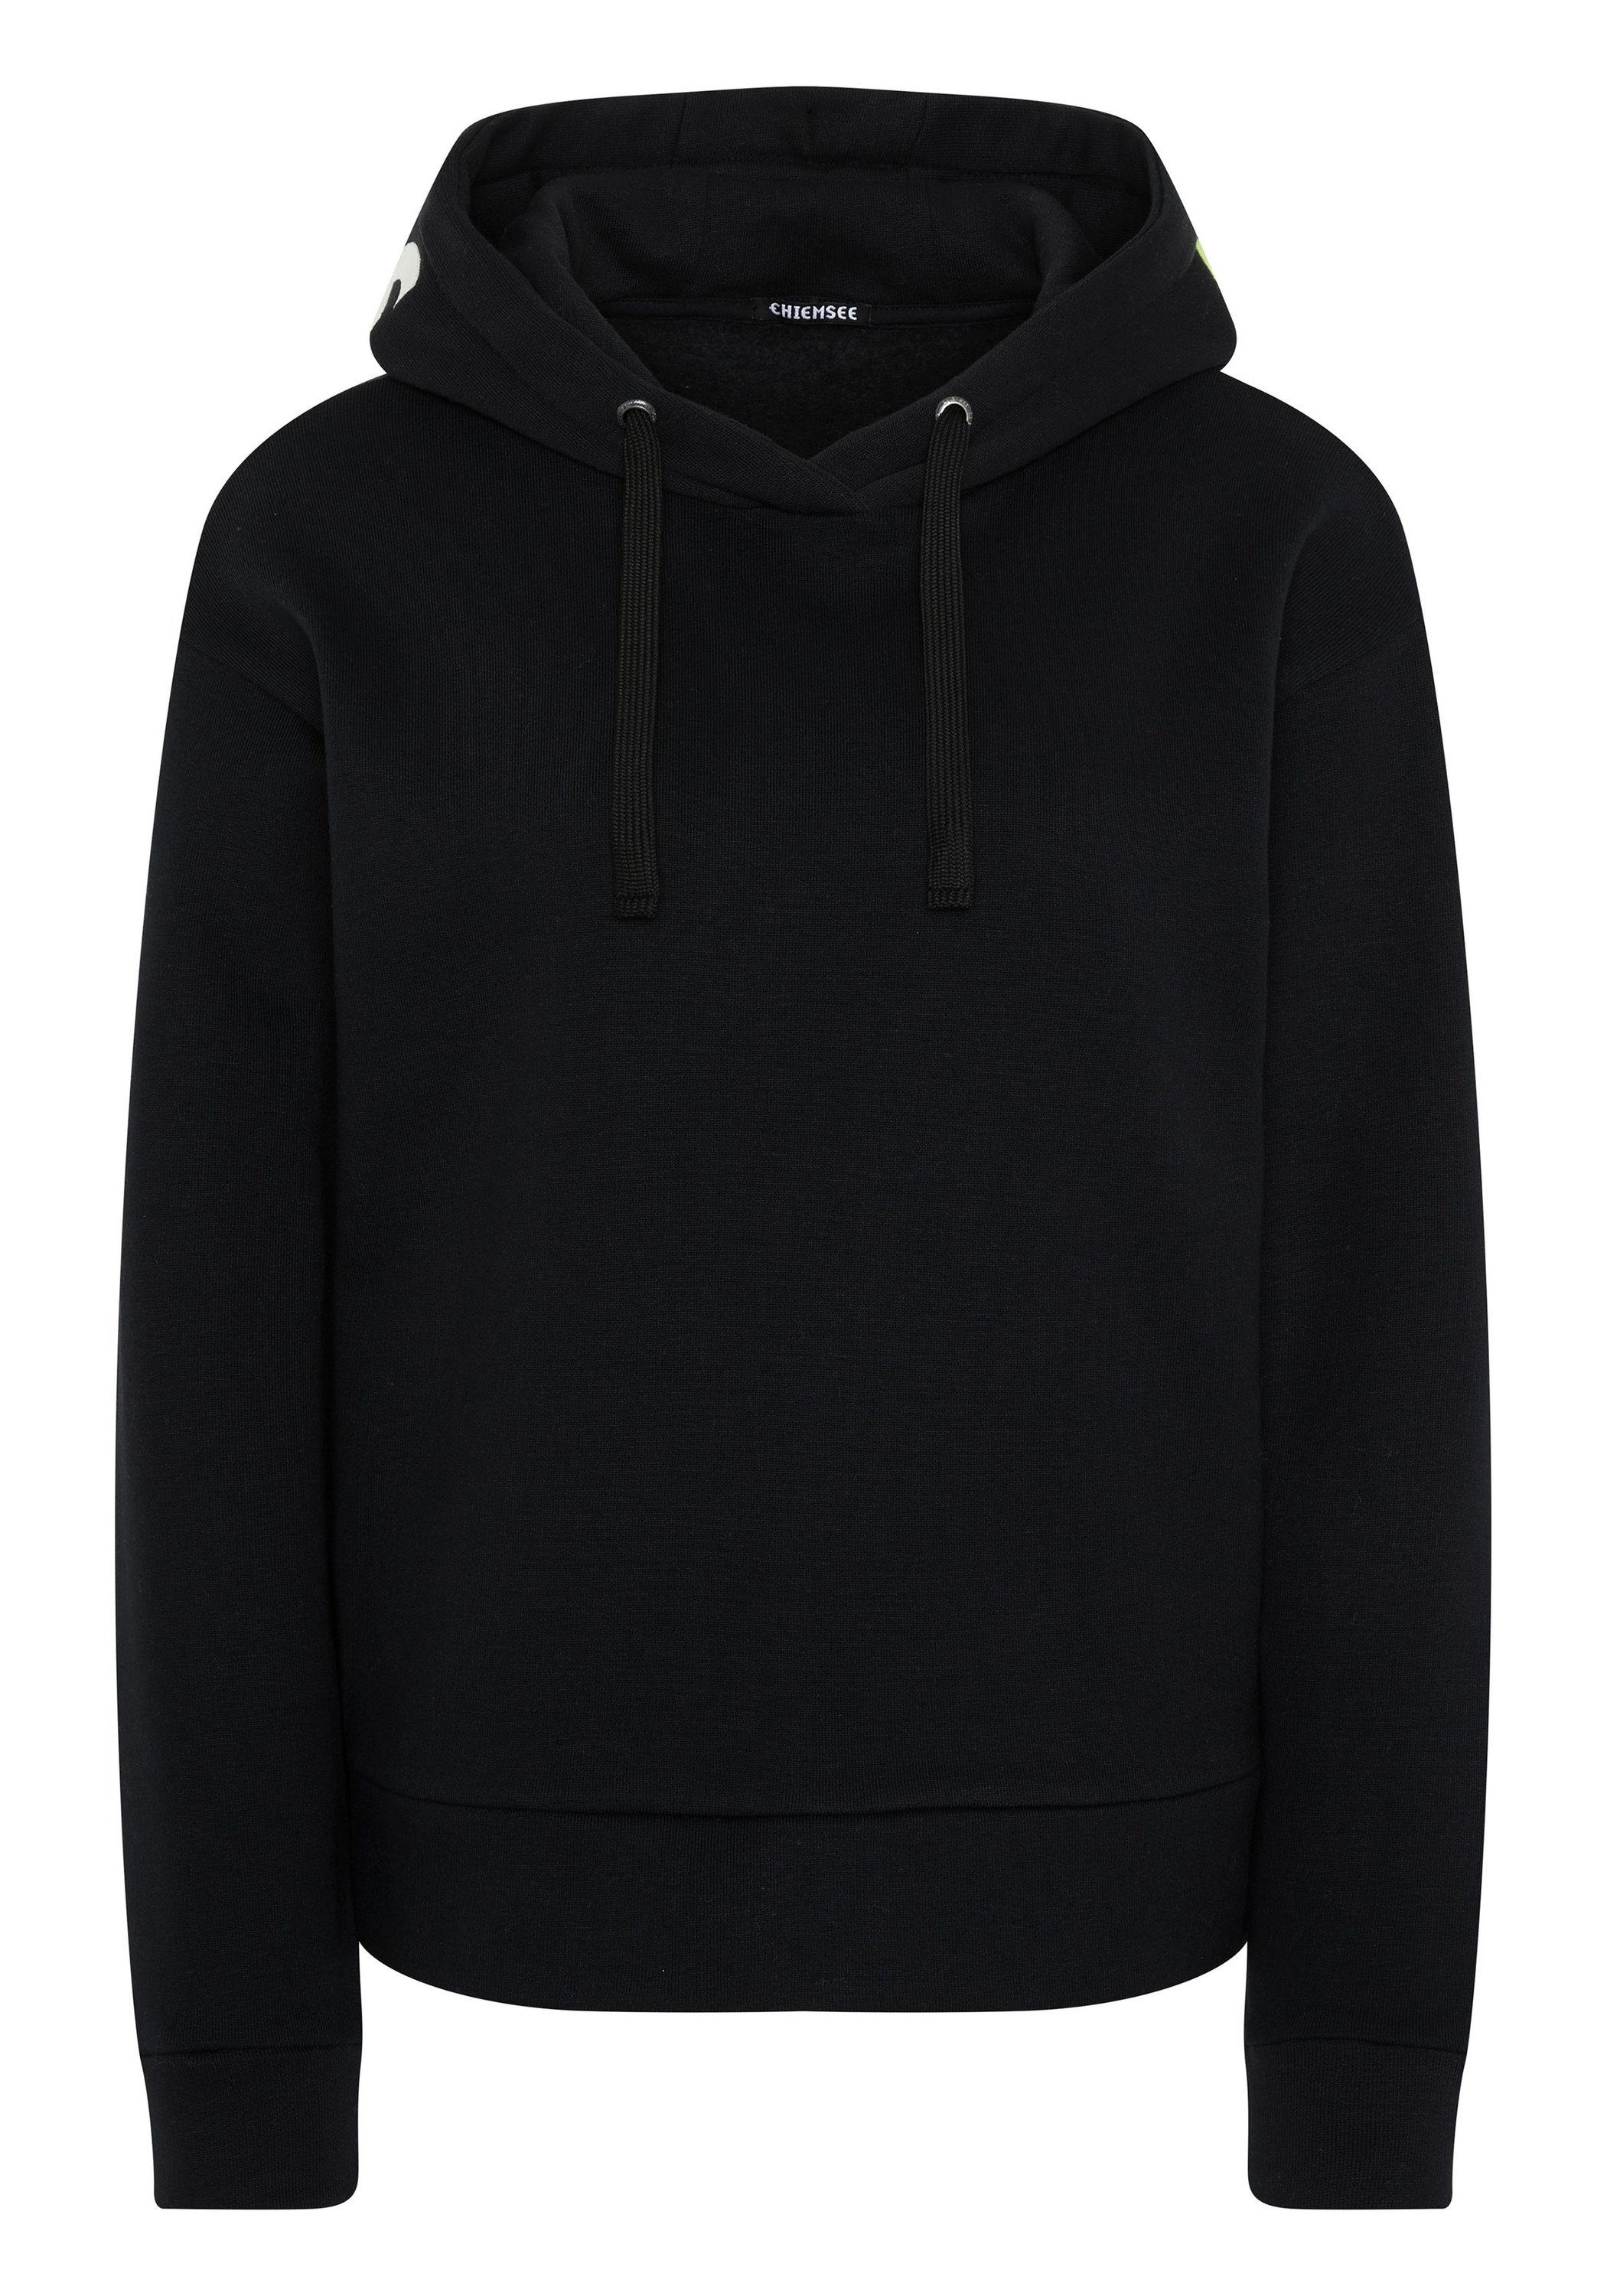 1 Kapuzensweatjacke Chiemsee Hoodie mit Label-Kapuze Comfort-Fit in schwarz O-Shape